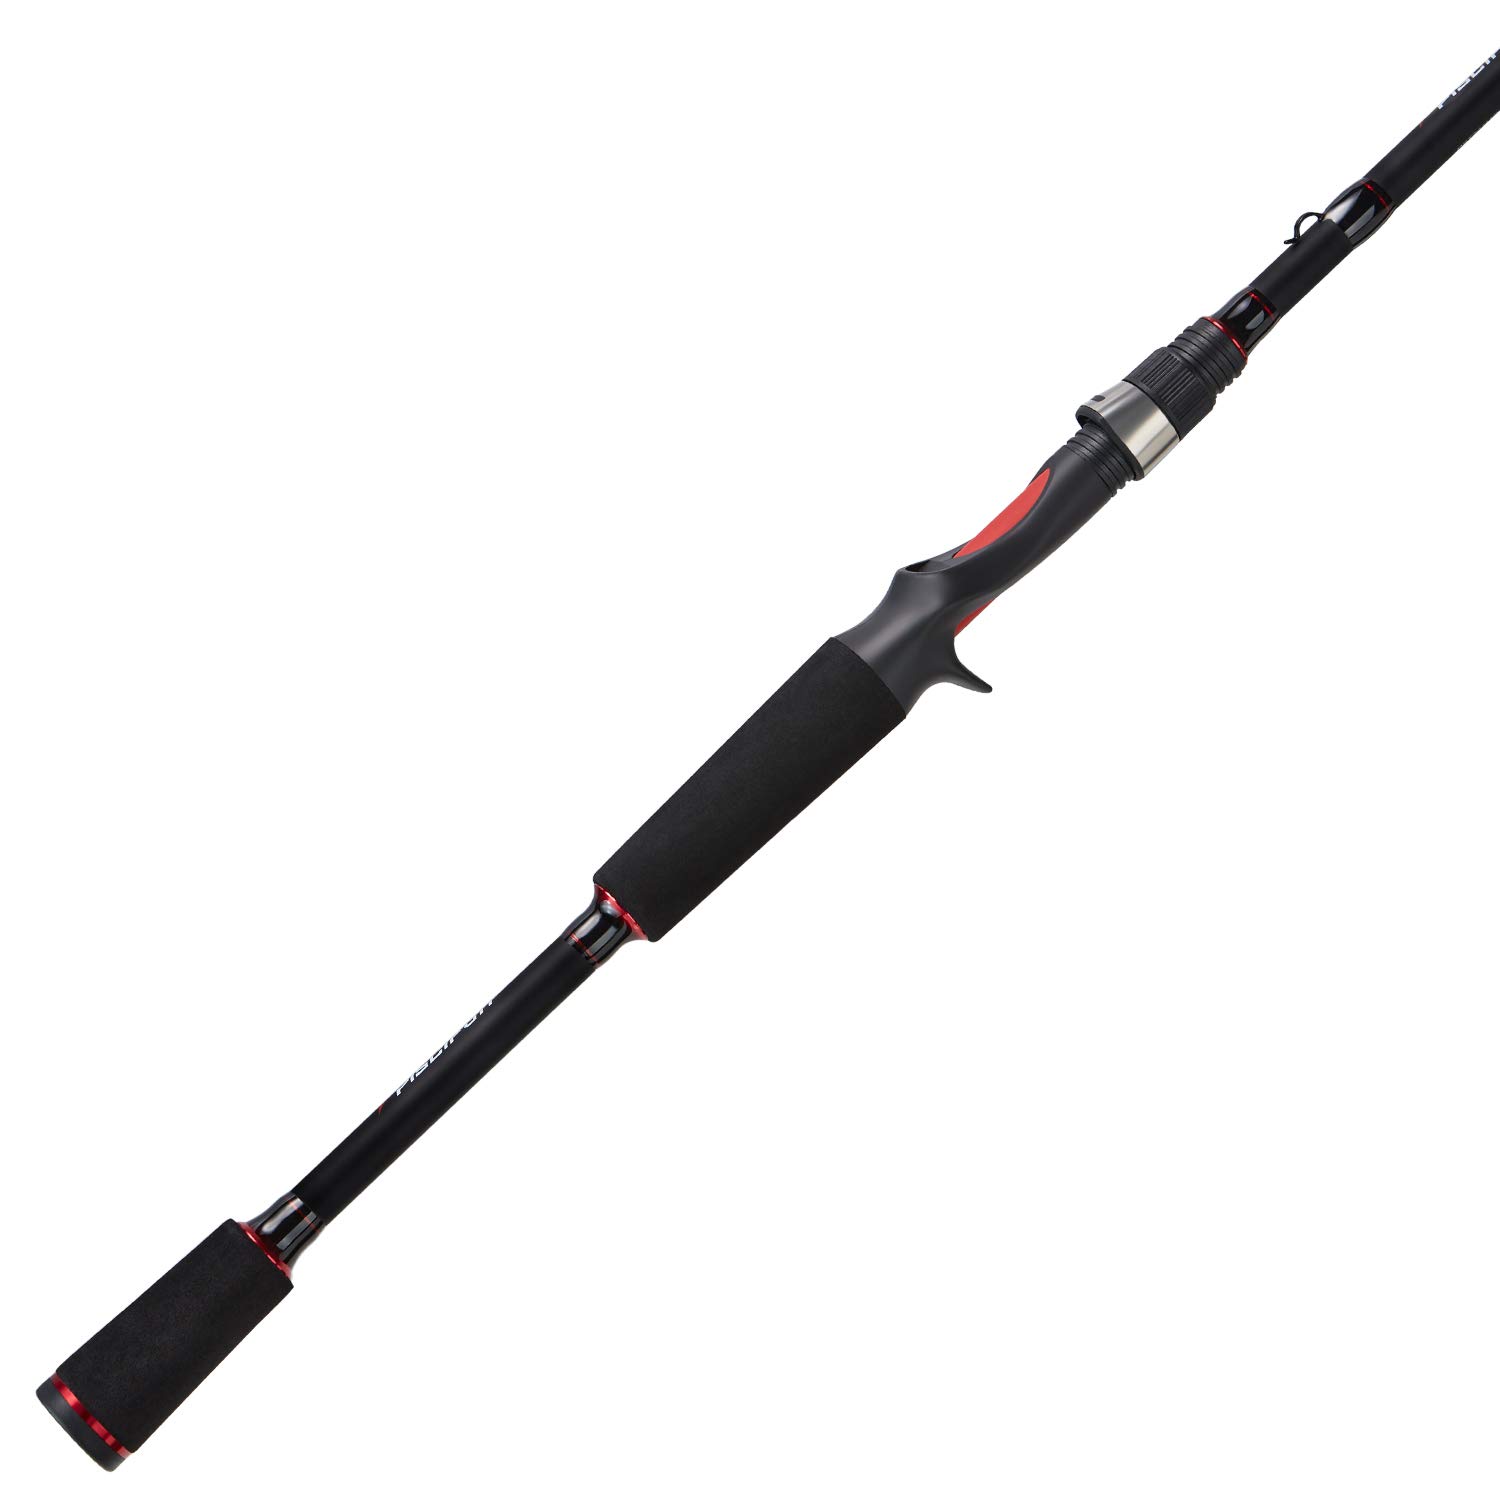 Piscifun Torrent Baitcasting Rod - Durable Lightweight Sensitive Fishing Rod,  Tournament Quality Casting Fishing Rod, One Piece & Two Pieces Baitcast Rods  Casting-1pc-7'6 Heavy